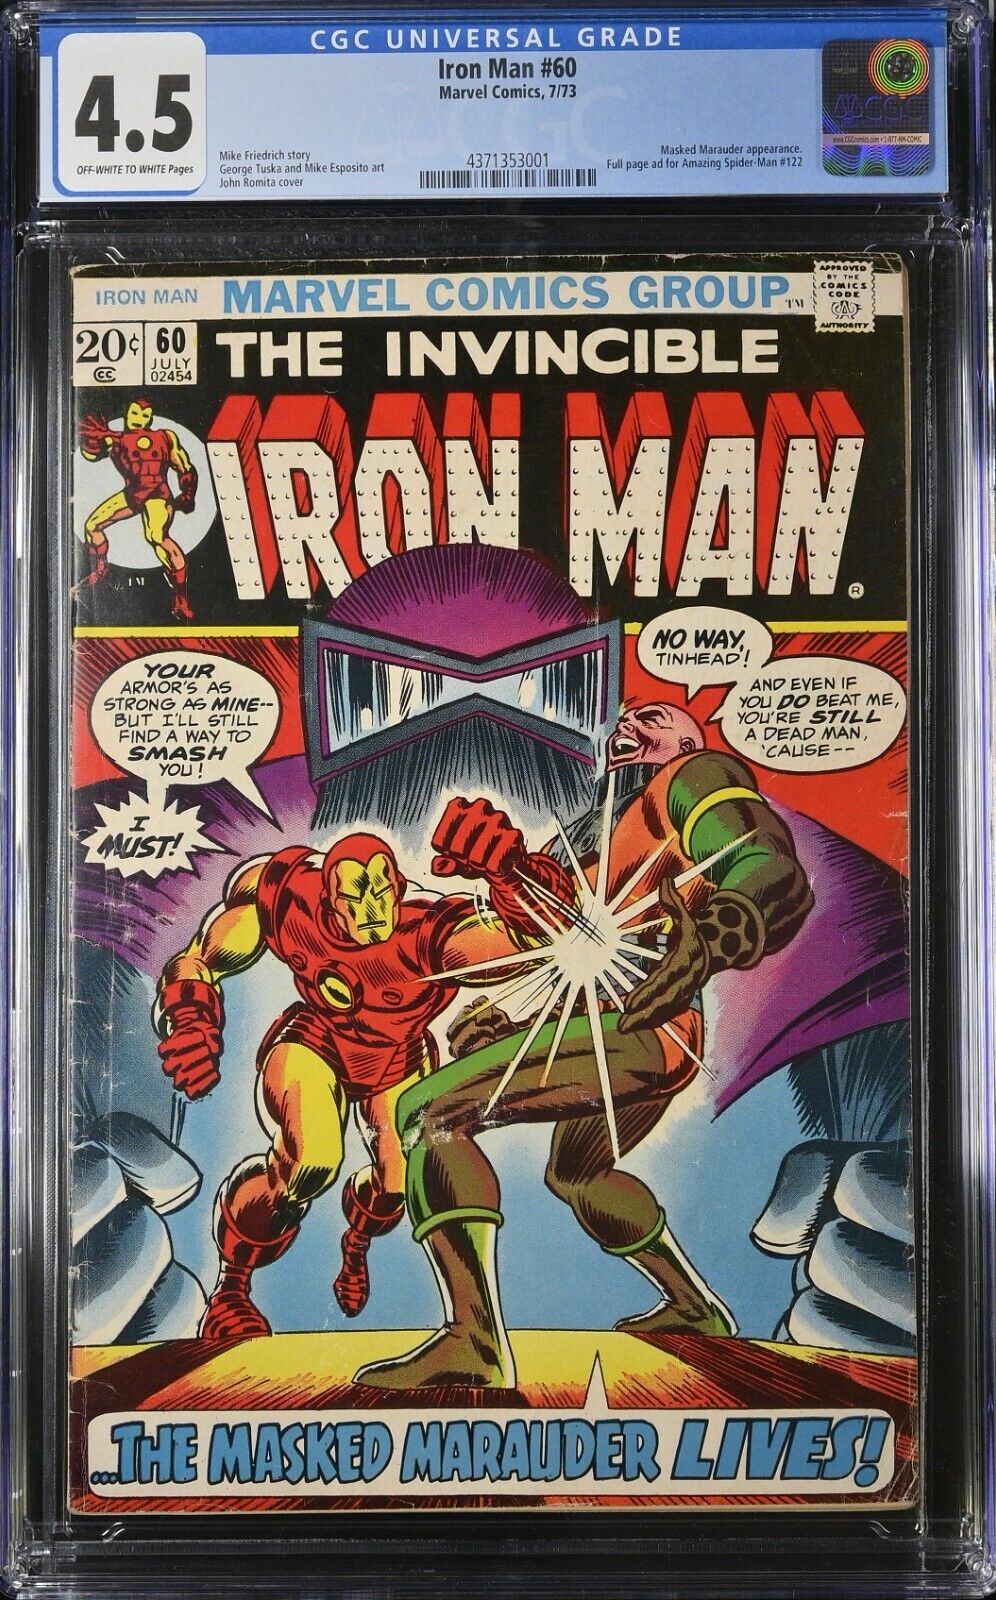 Iron Man 60 - CGC 4.5 (Jul ‘73)